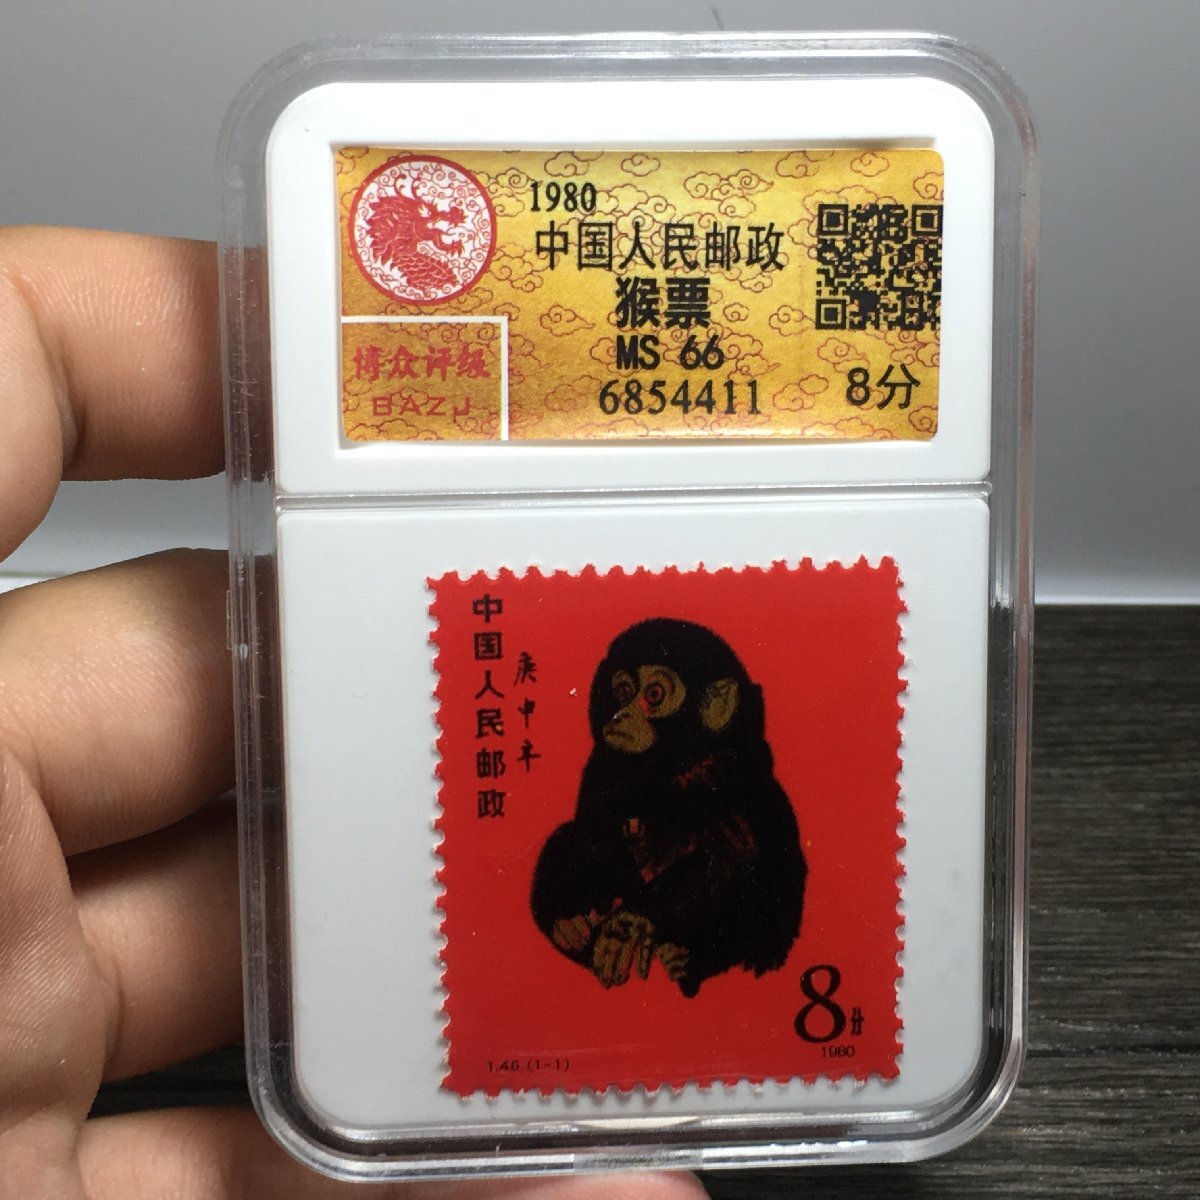 [.] China stamp T46 red ....1980 New Year's greetings stamp 8 minute . main stamp 